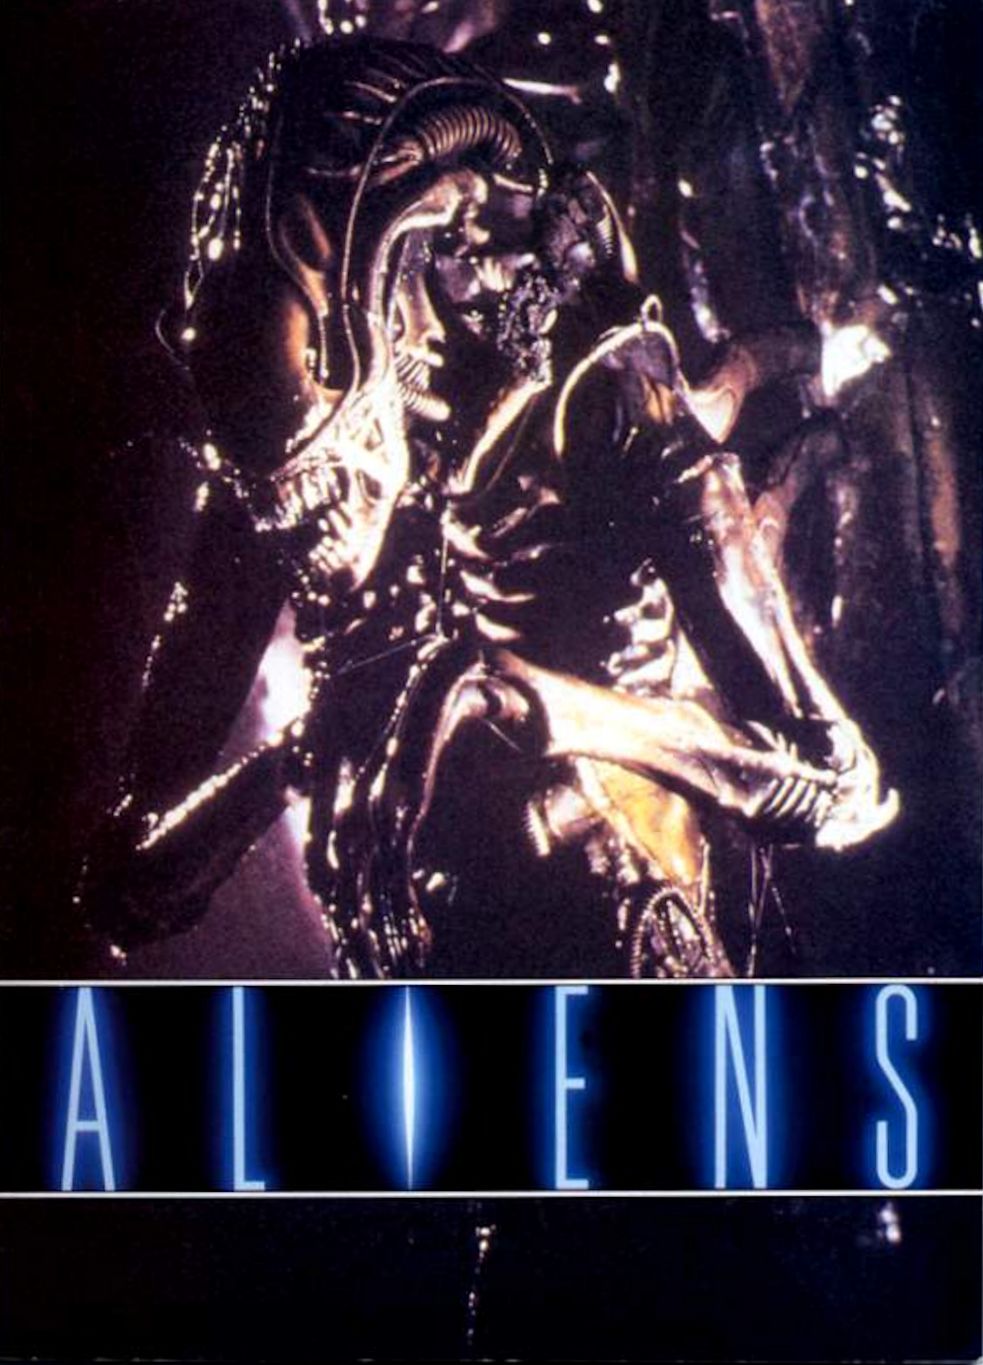 Aliens Poster/Cover
Keywords: media_poster